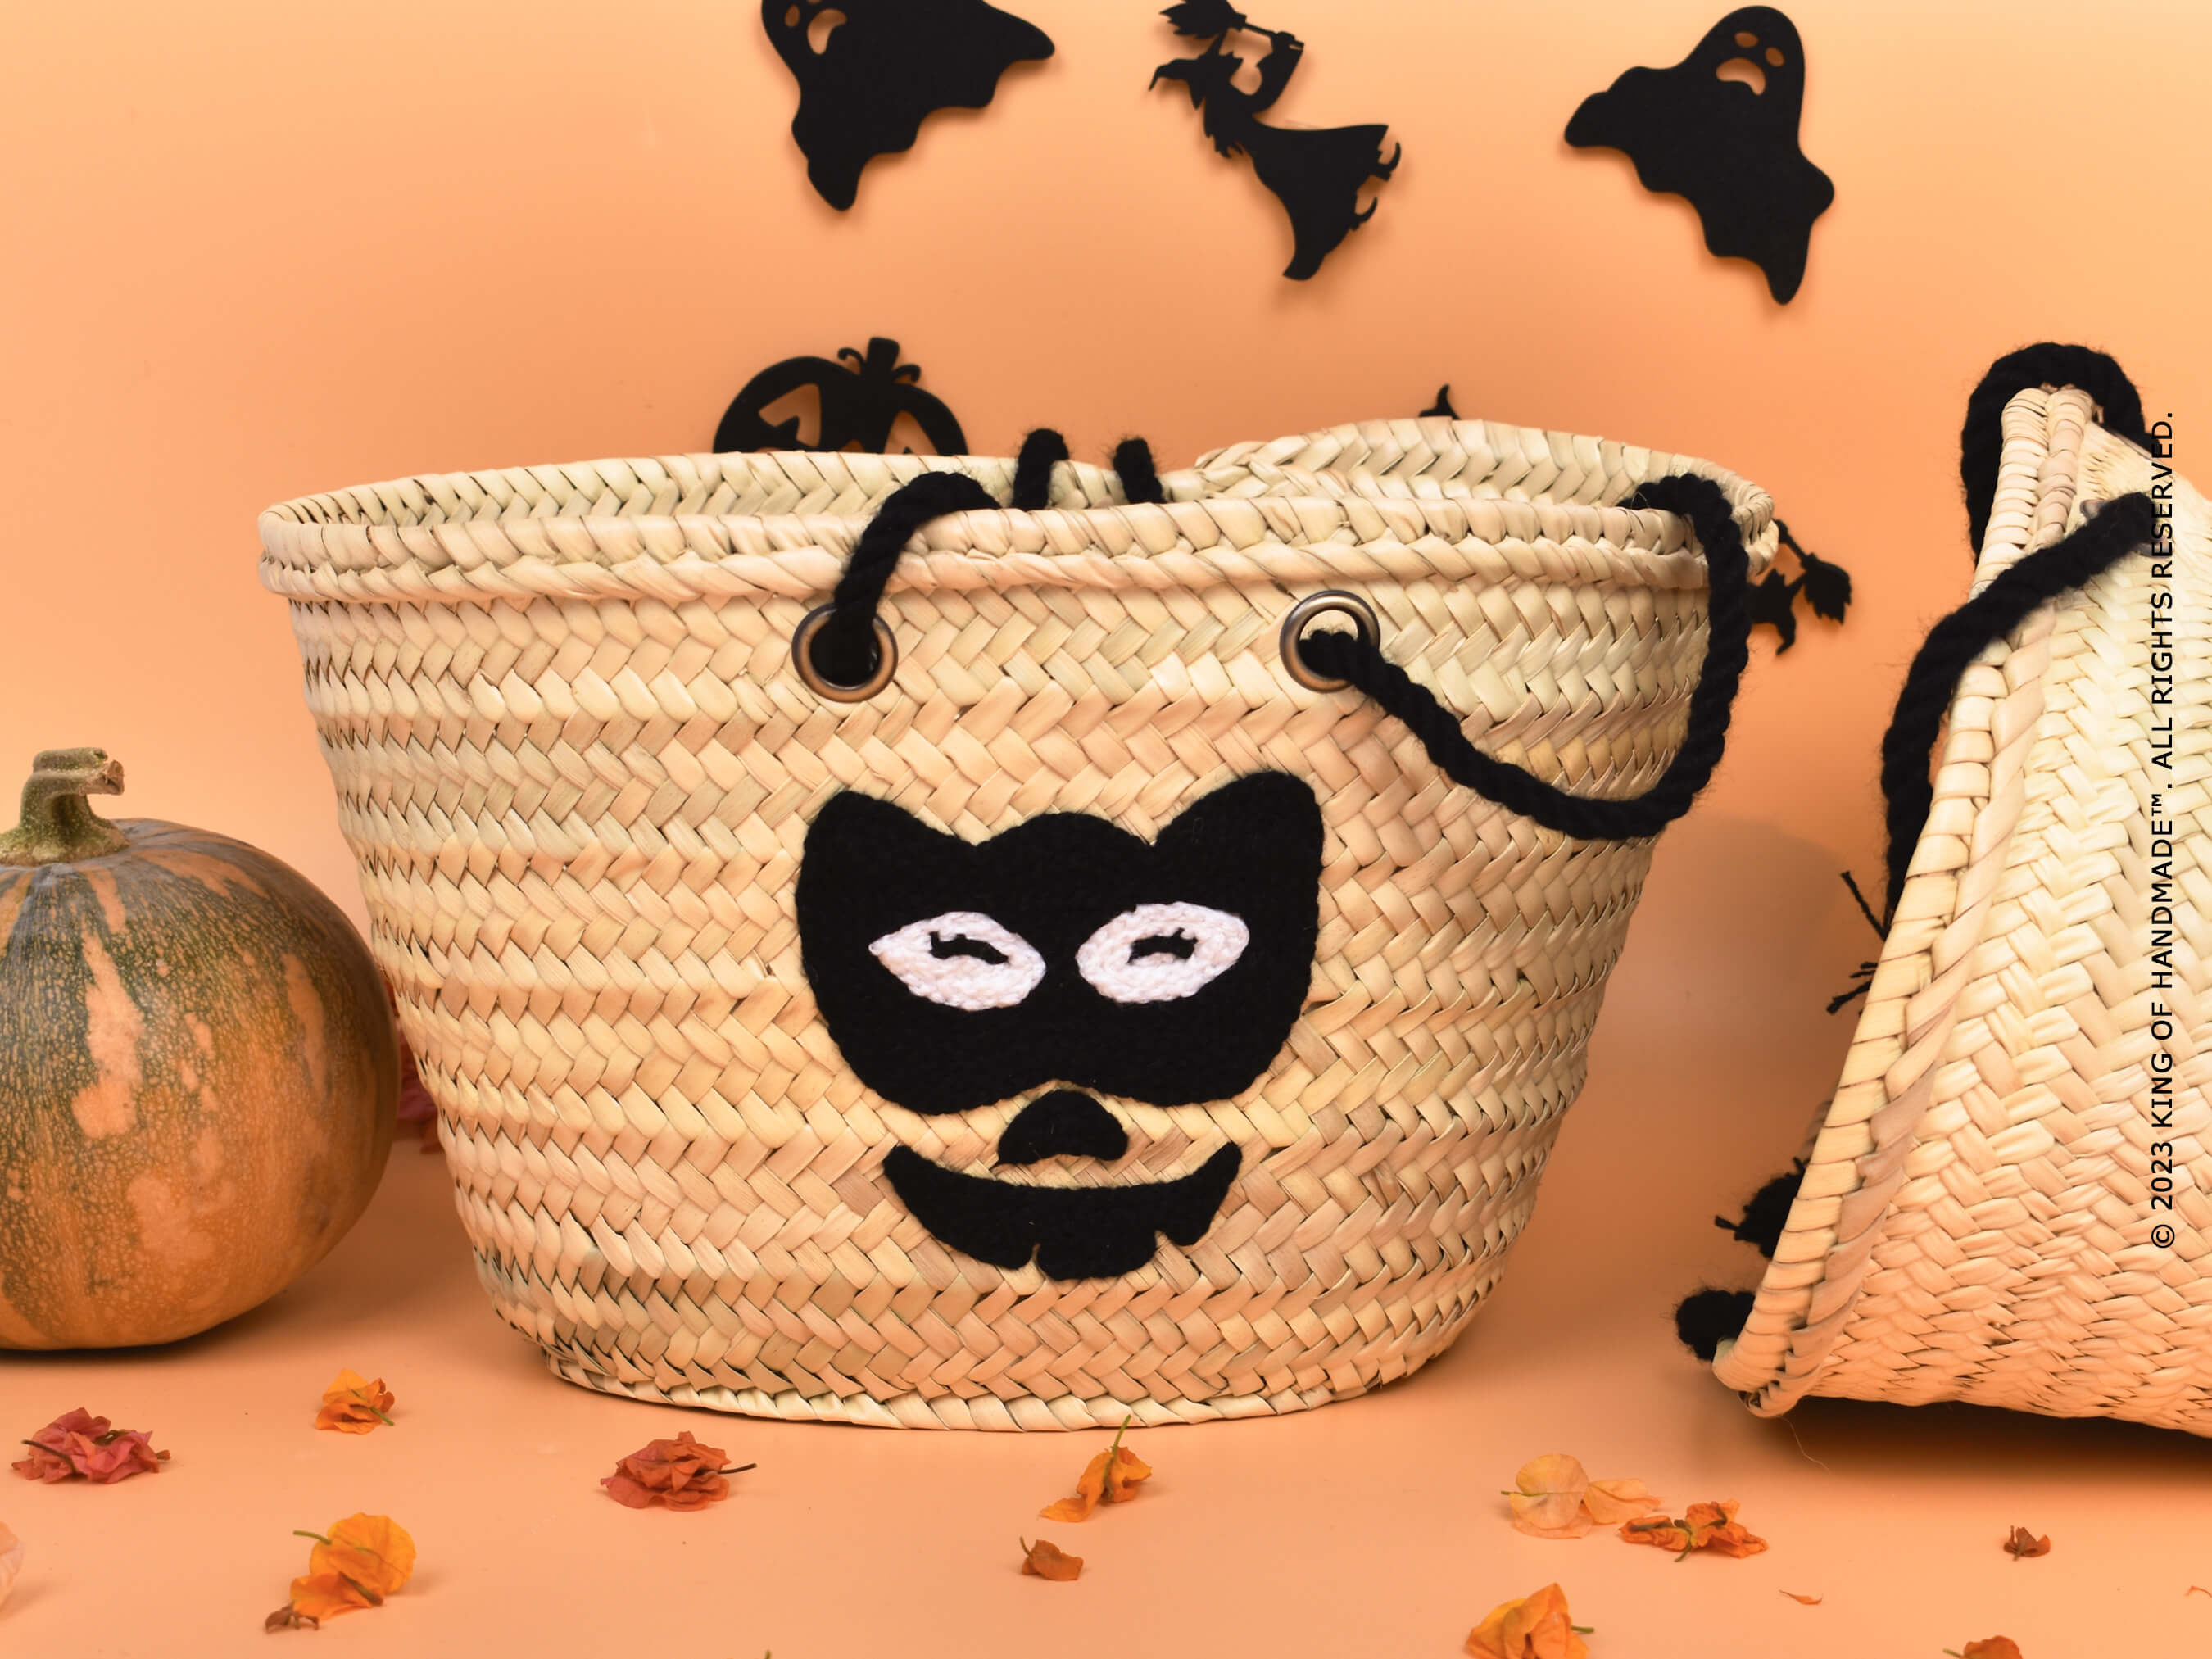 Personalized Basket - Owl  Bucket!